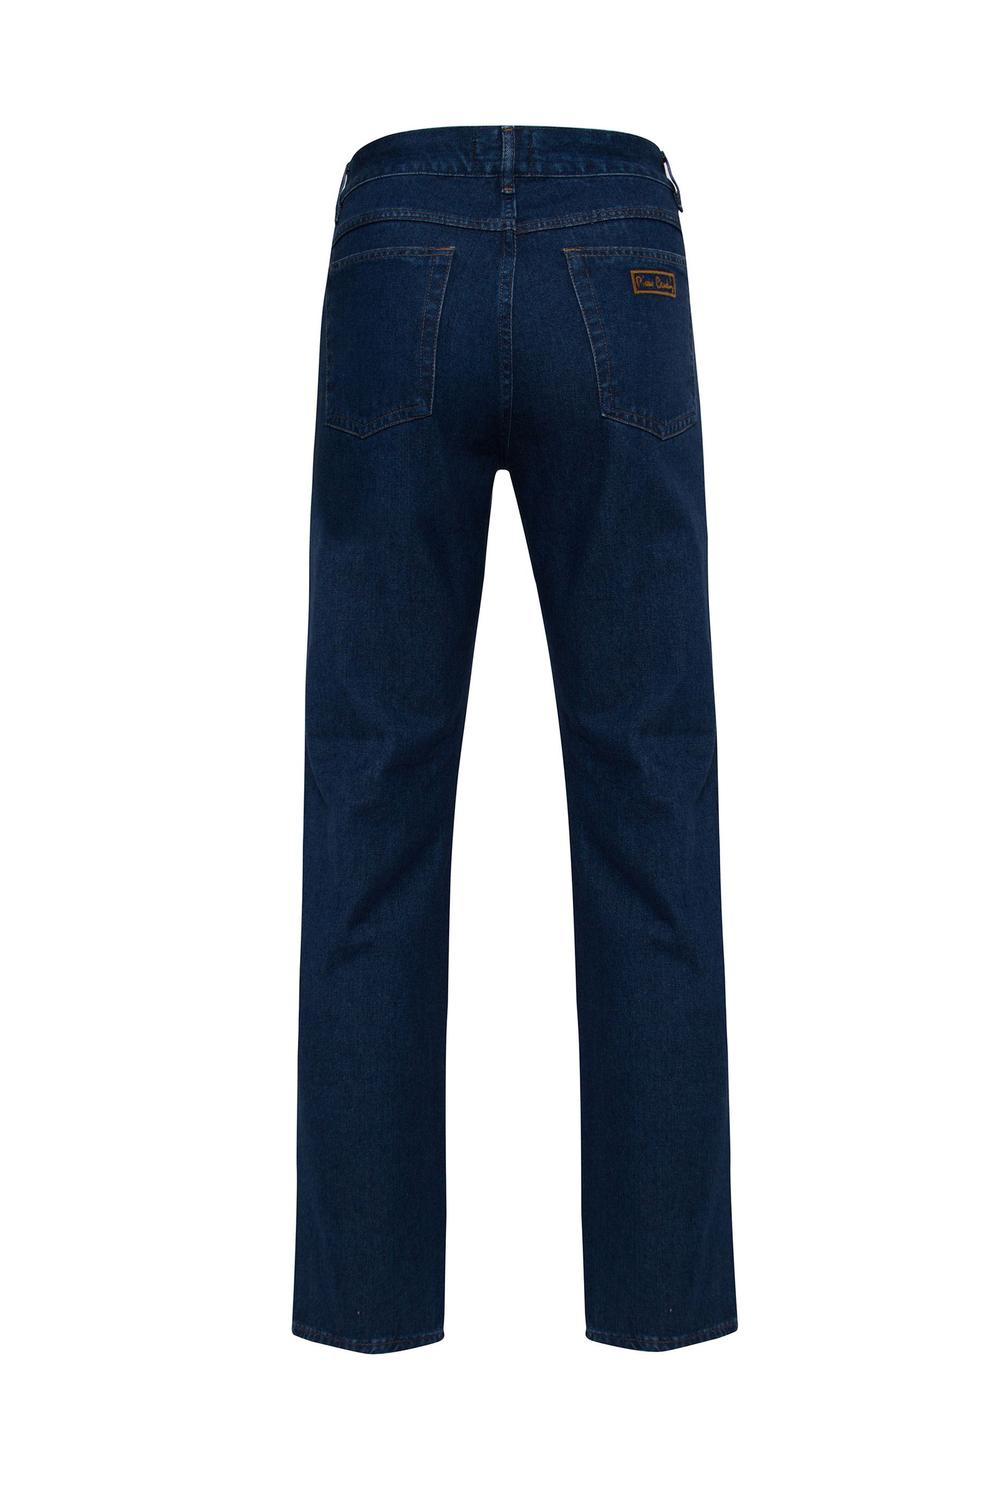 calça jeans cotton